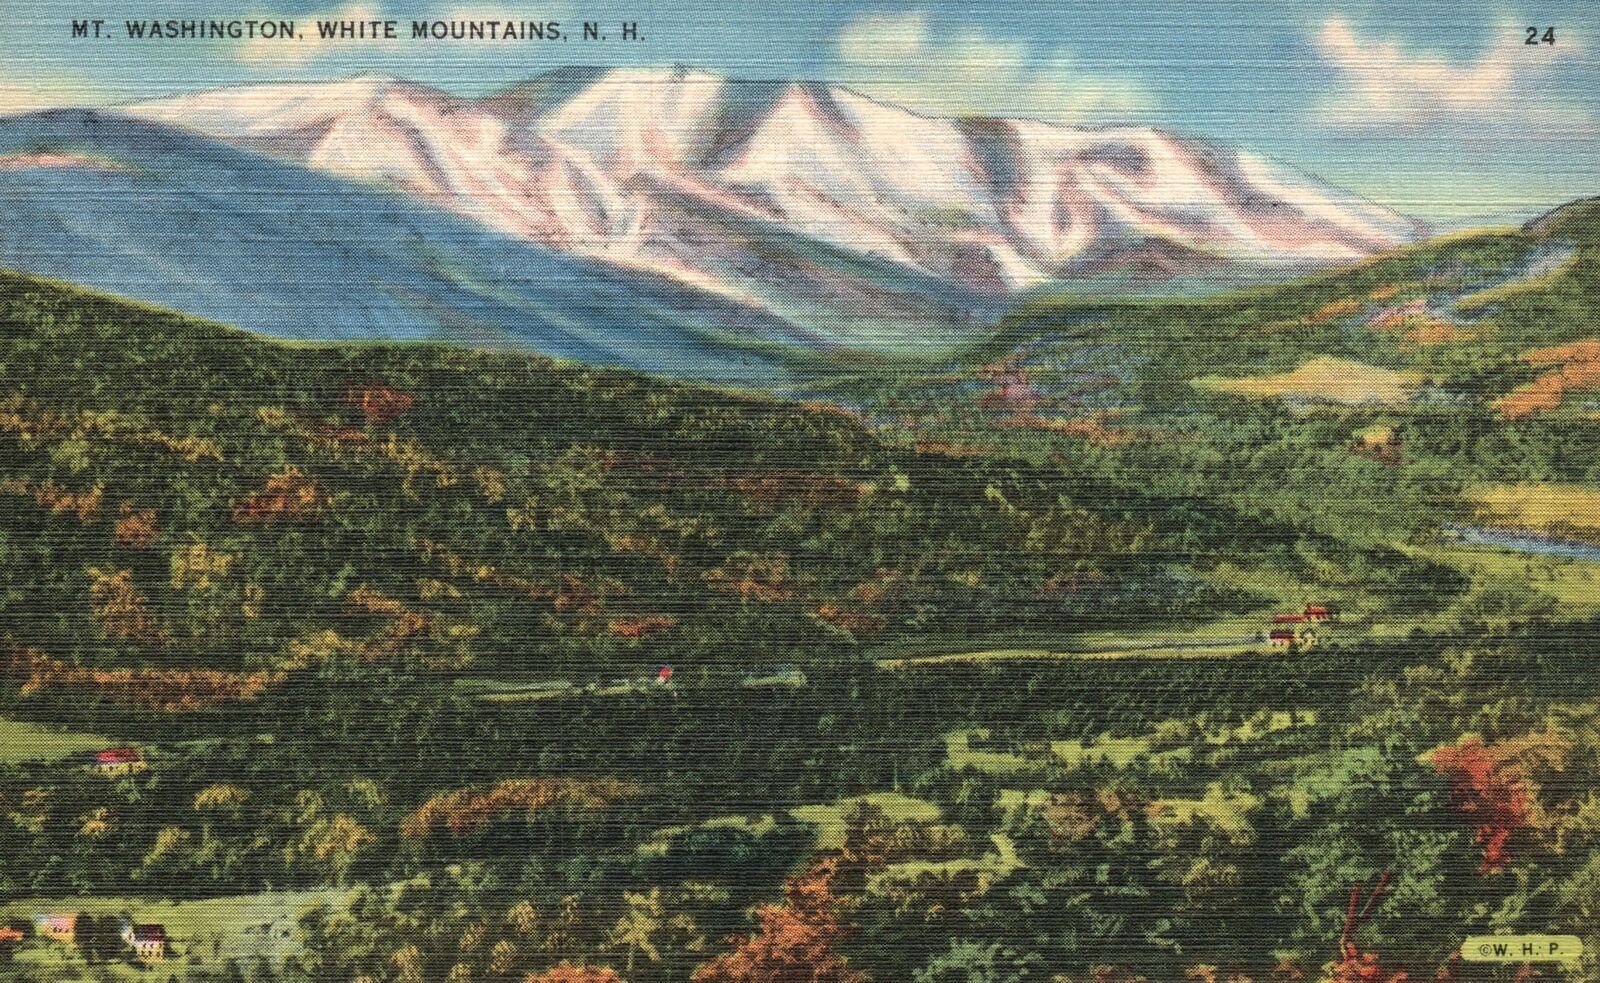 Vintage Postcard Mount Washington White Mountains Greenfield New Hampshire N.H.